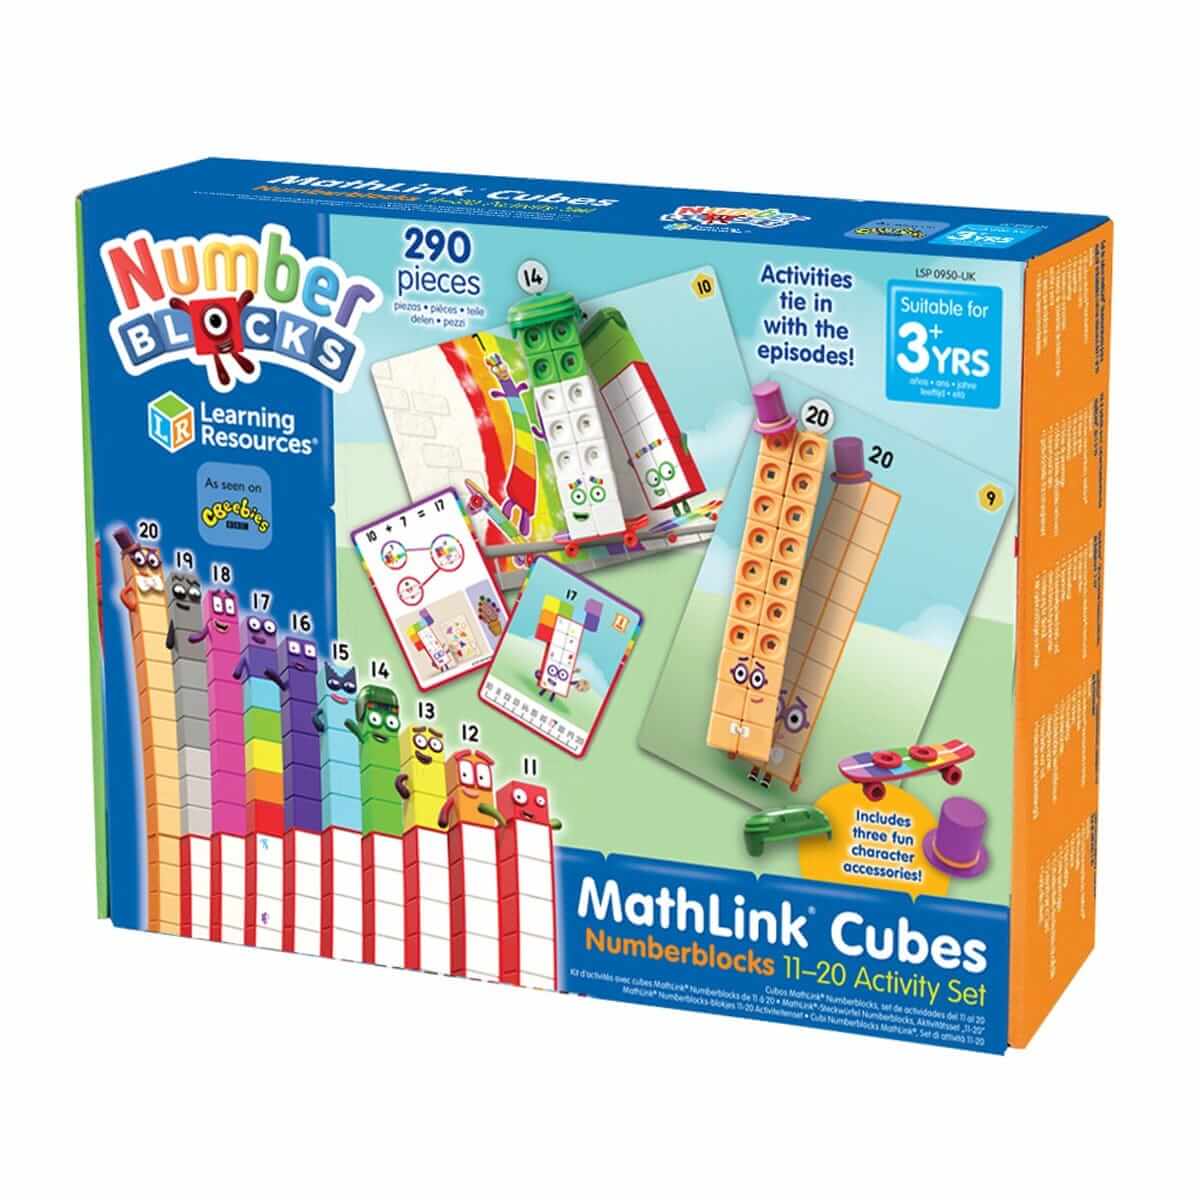 Numberblocks Mathlink Cubes 11-20 Activity Set